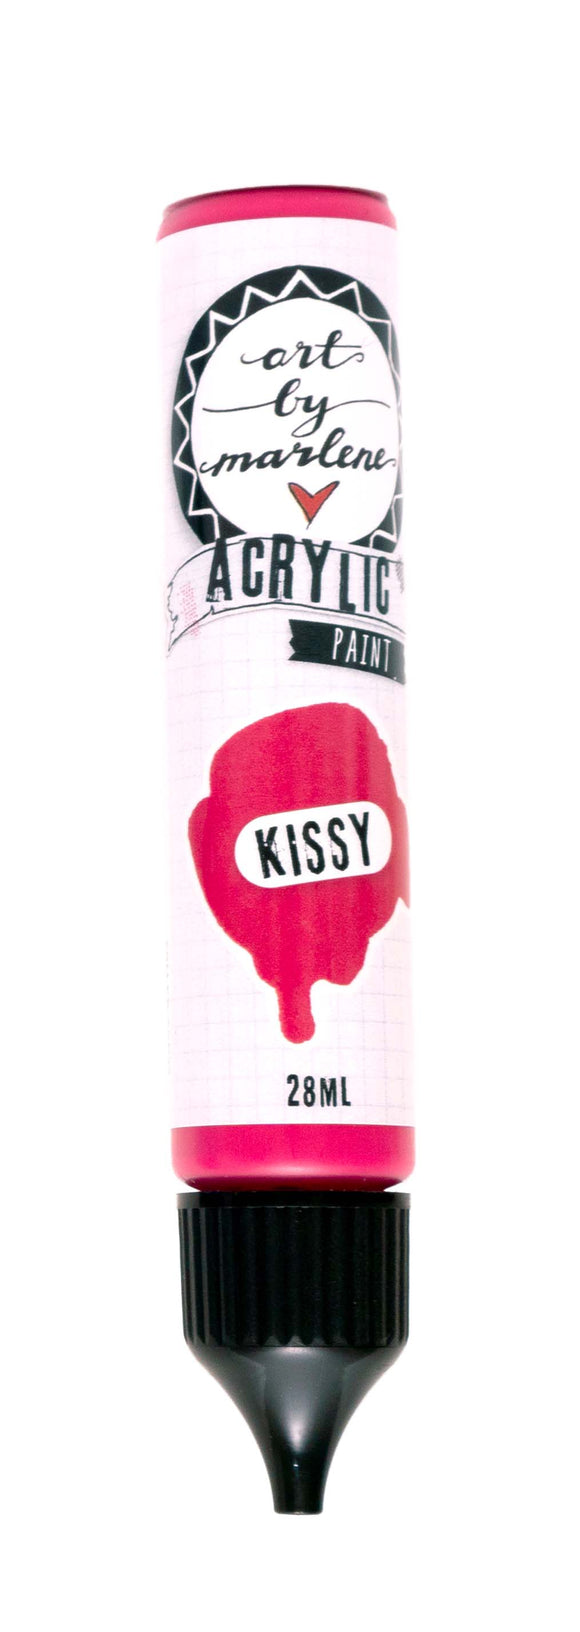 Acrylic Paint - Kissy : (ABM) ACP32